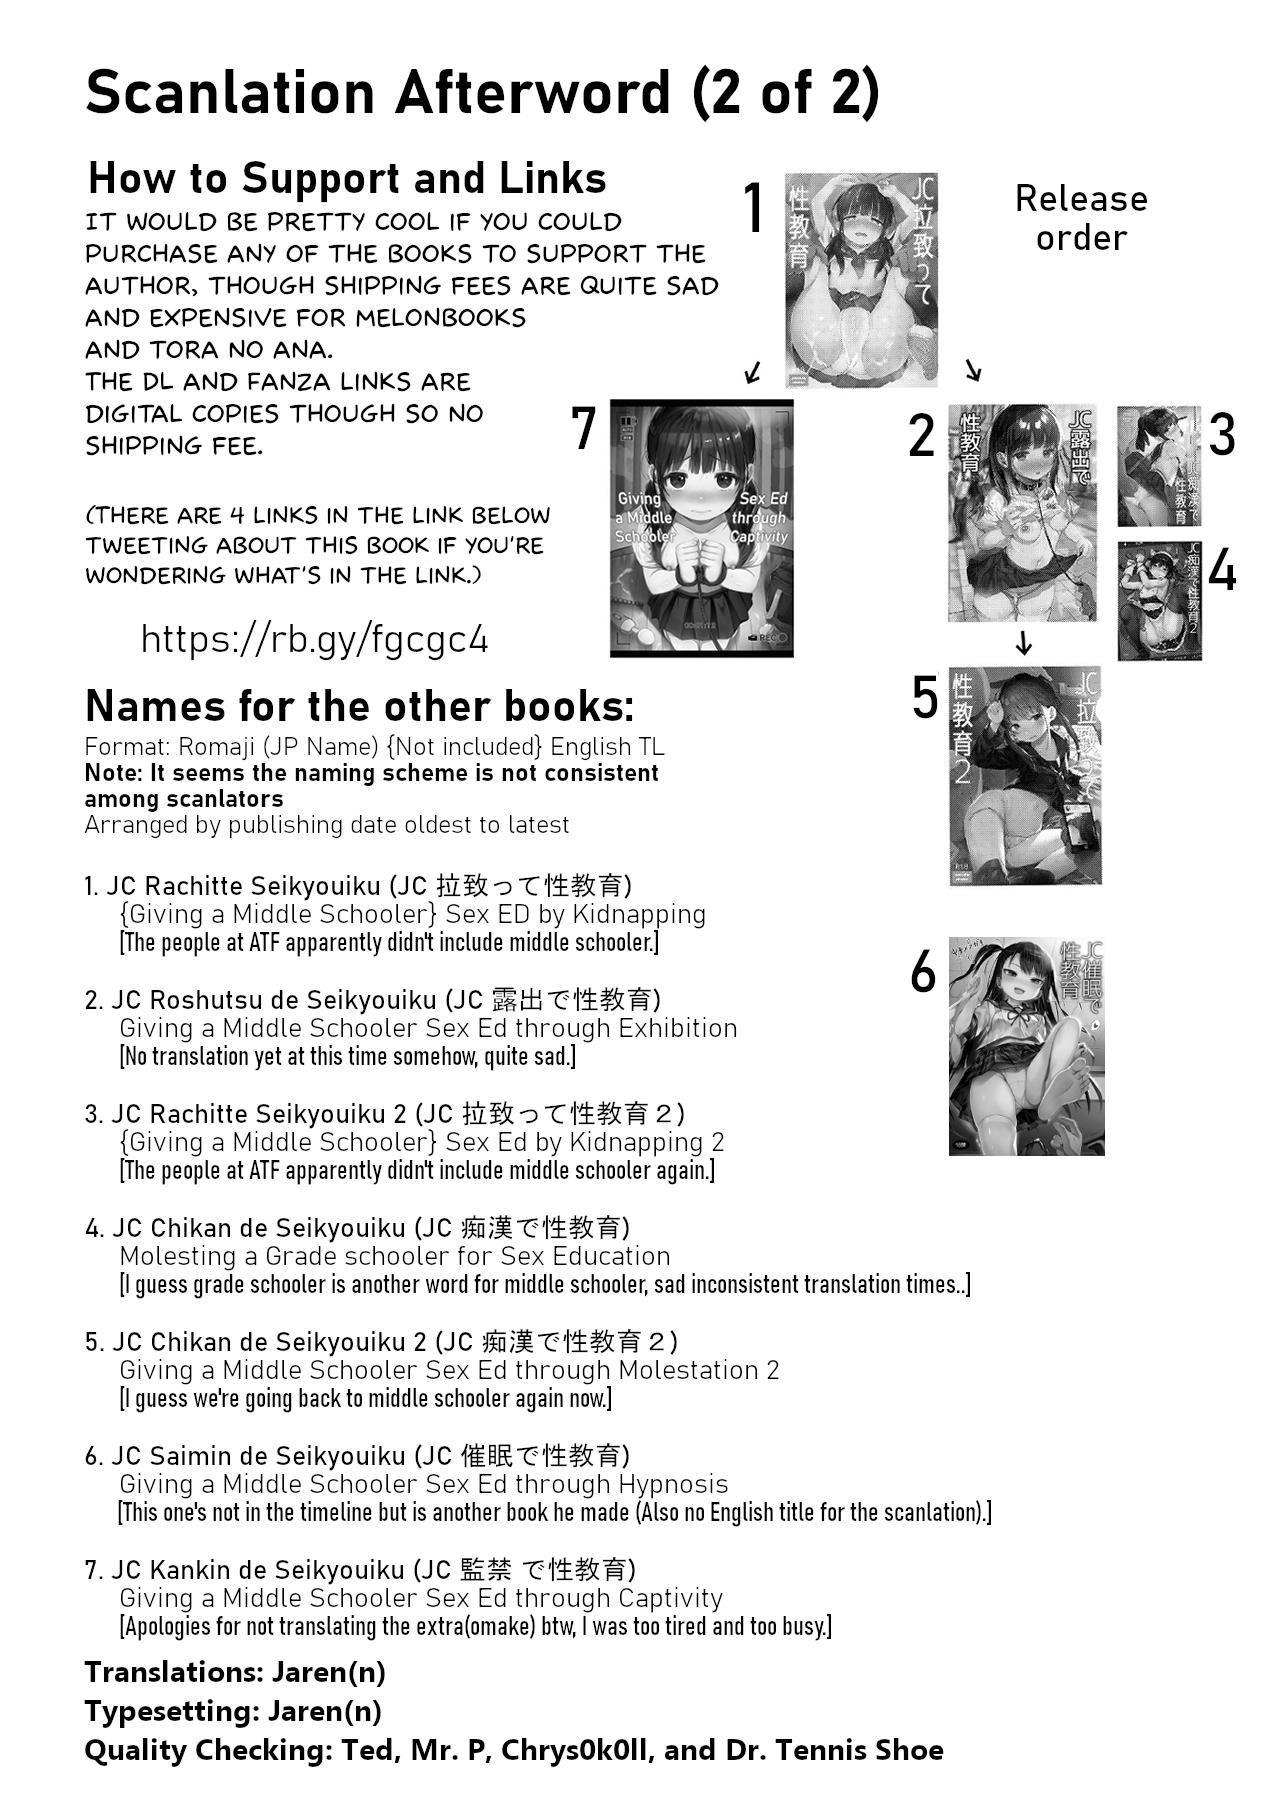 Perfect Body JC Kankin de Seikyouiku | Giving a Middle Schooler Sex Ed through Captivity - Original Pmv - Page 39